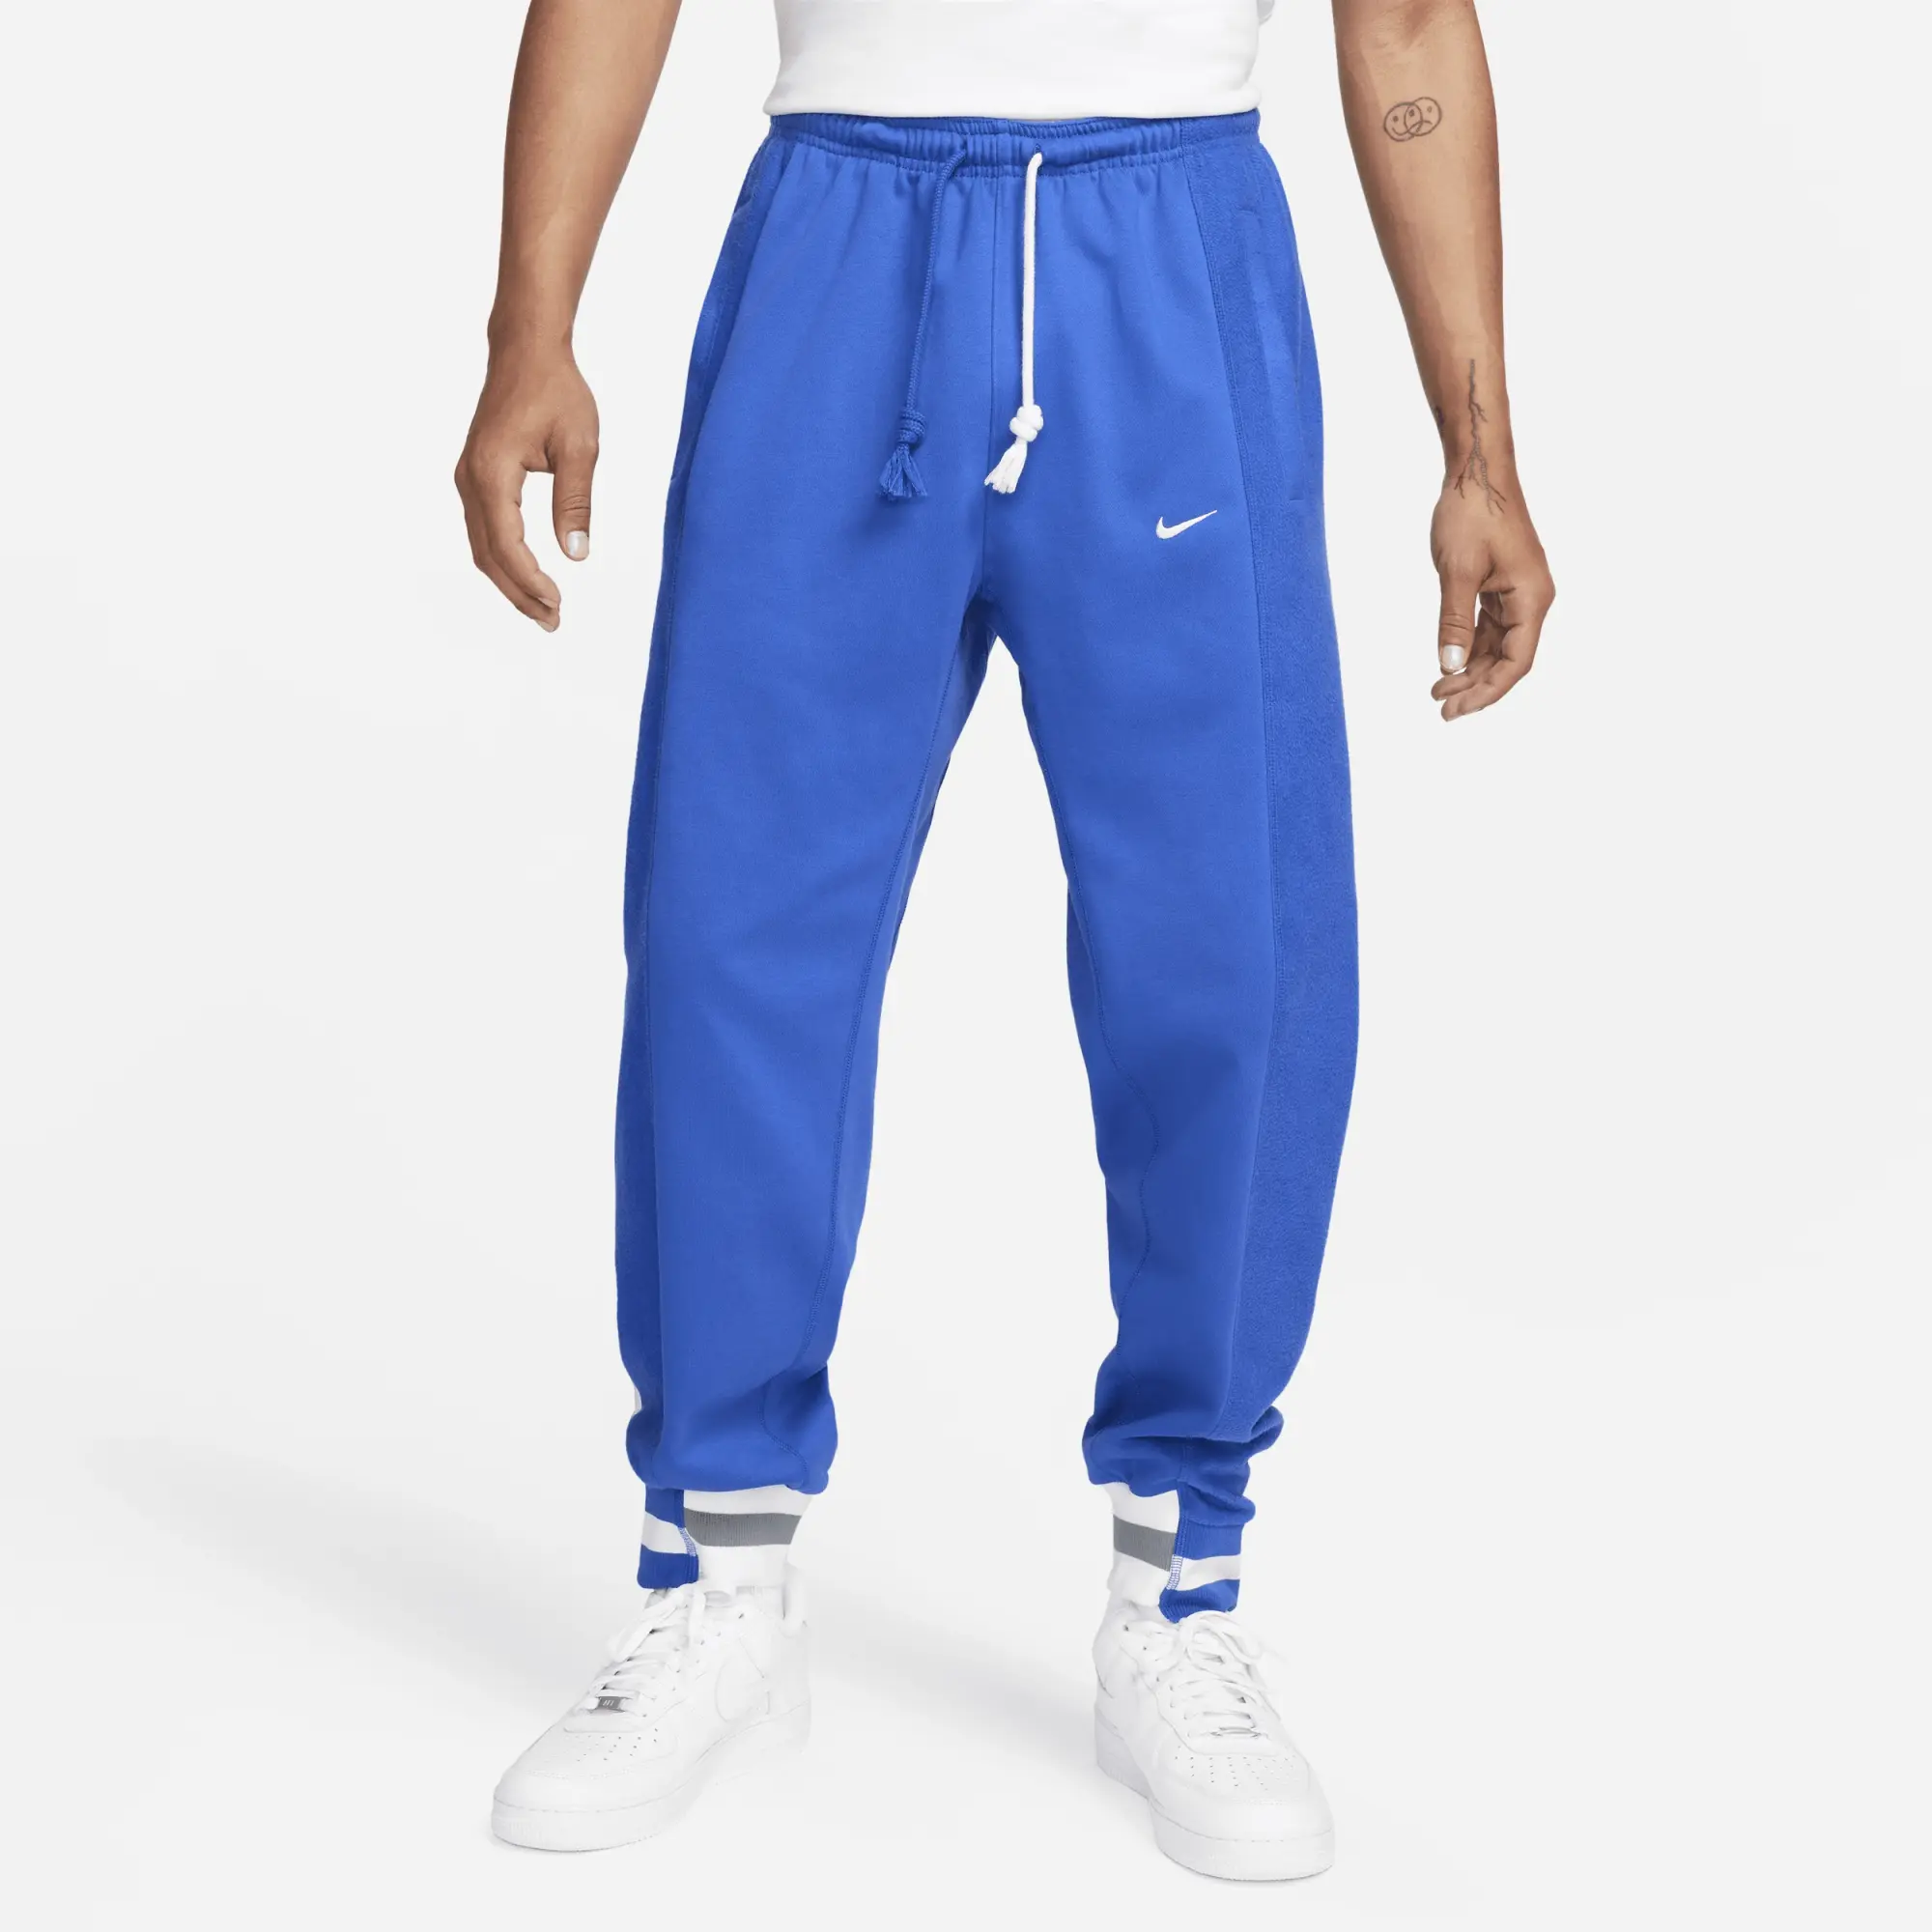 Nike Dri-FIT Standard Issue Men's Basketball Trousers - Blue